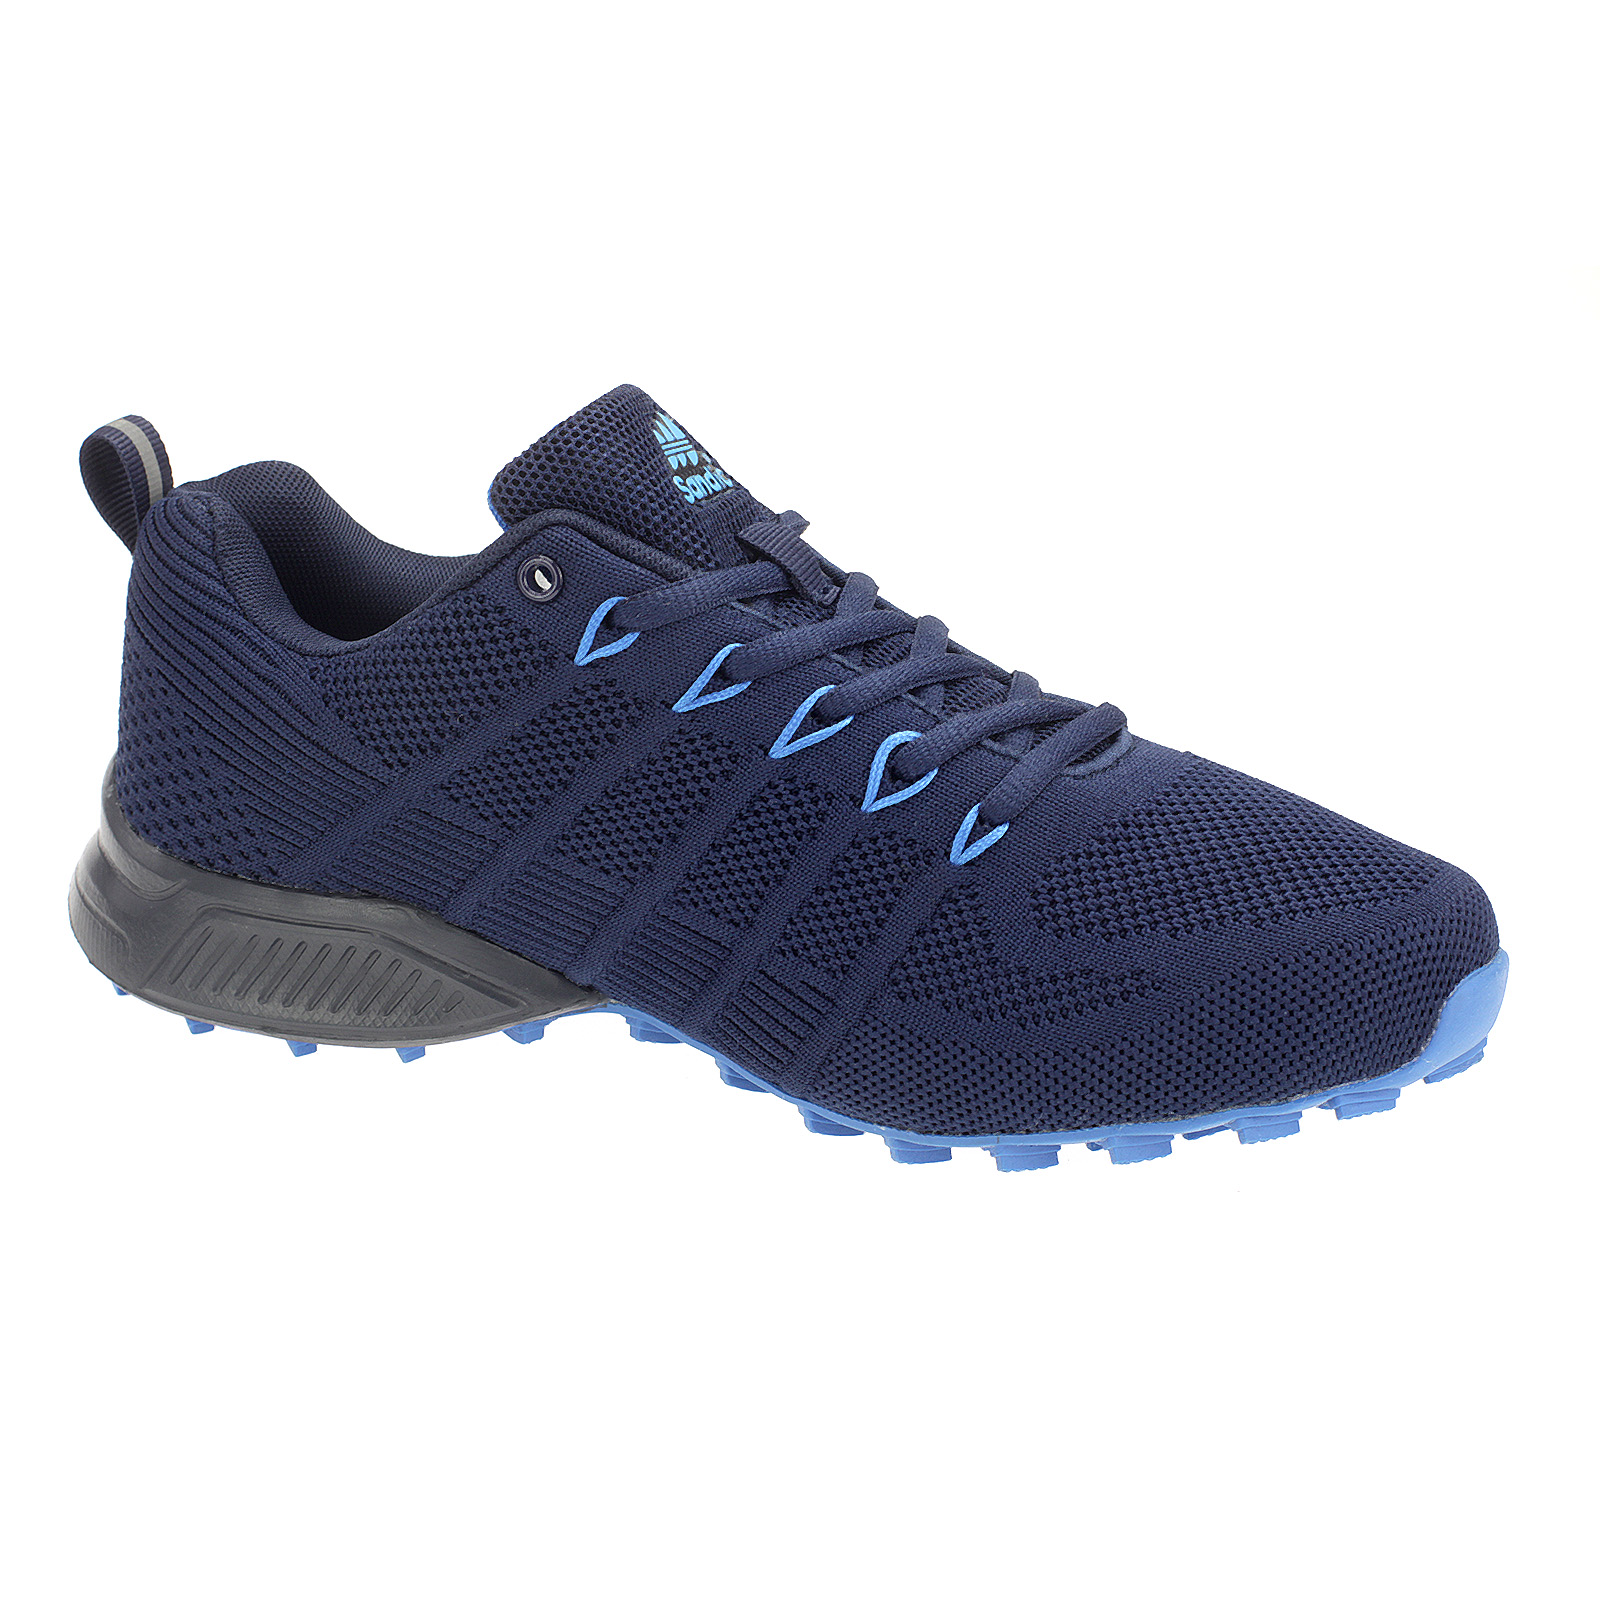 Herrenschuhe Sportschuhe Sneaker SD2830 4. Navy Blau